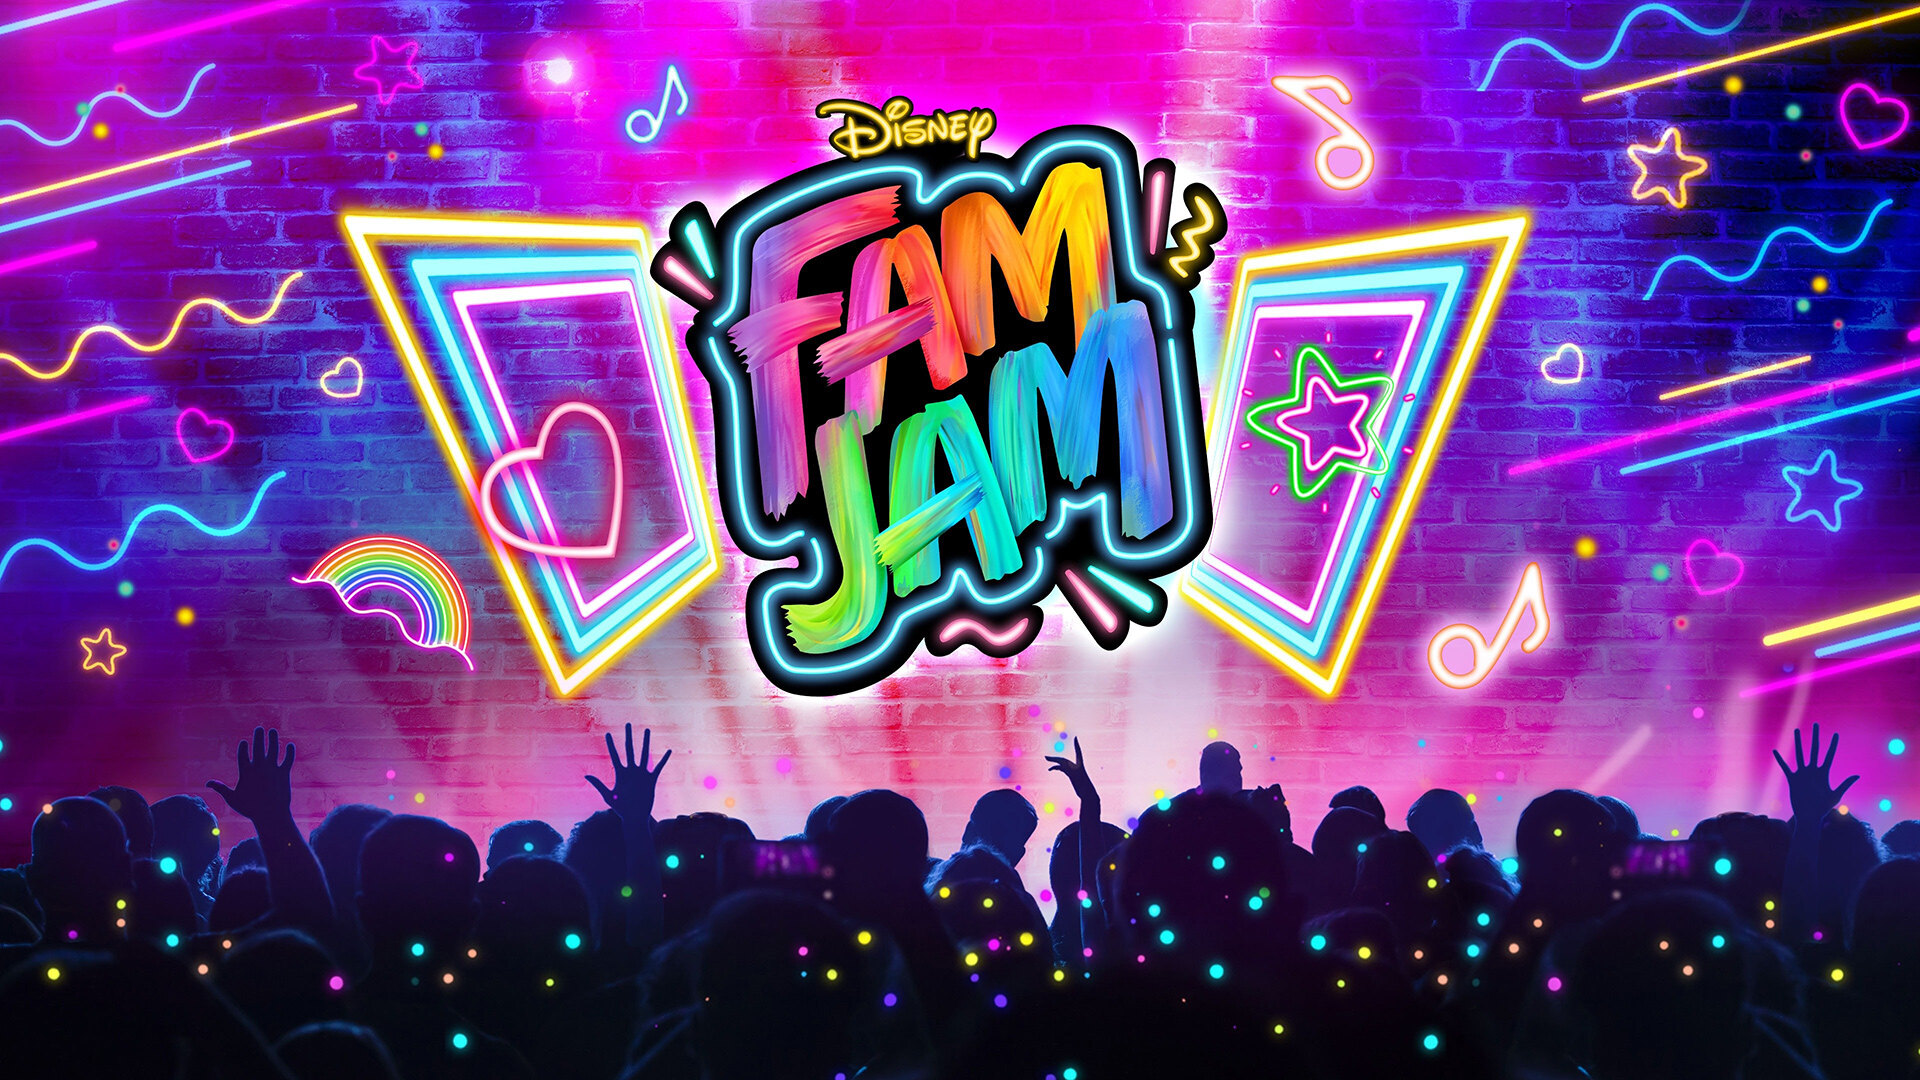 Disney Fam Jam (TV Series 2020)